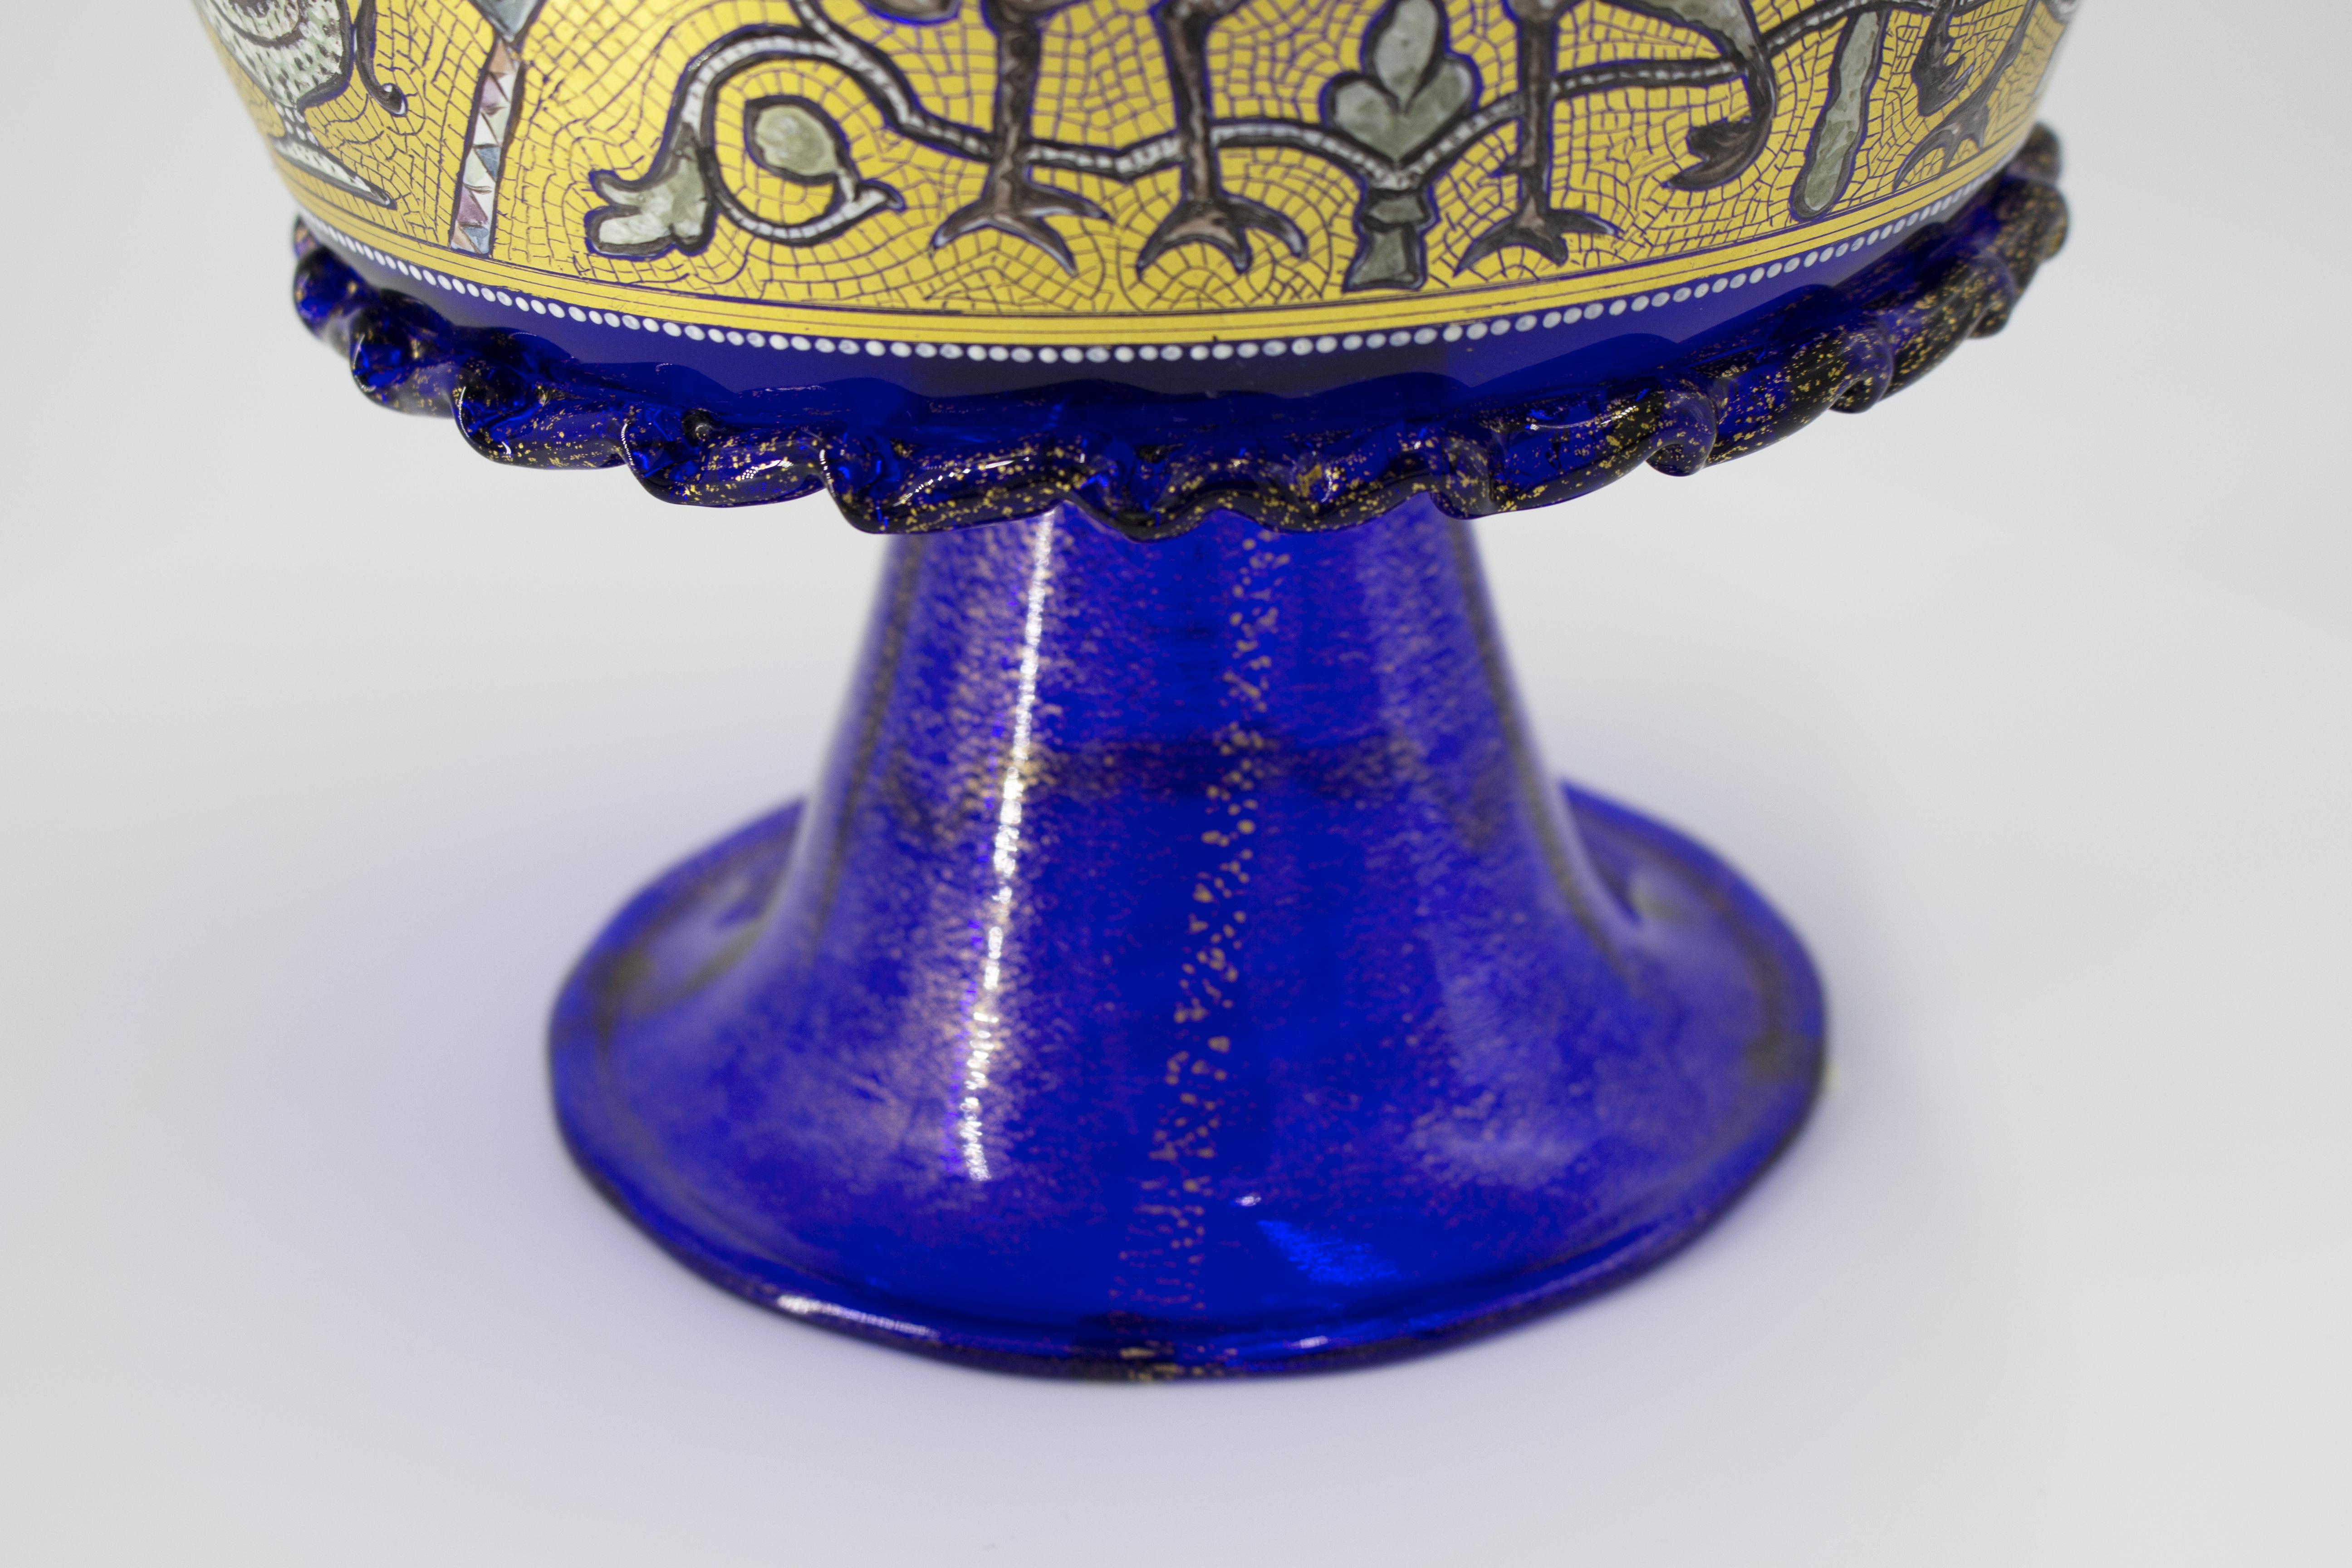 Renaissance Officine di Murano 1295 Handmade Glass Cup Hand Decored 24kt Gold Leaf & Enamel For Sale